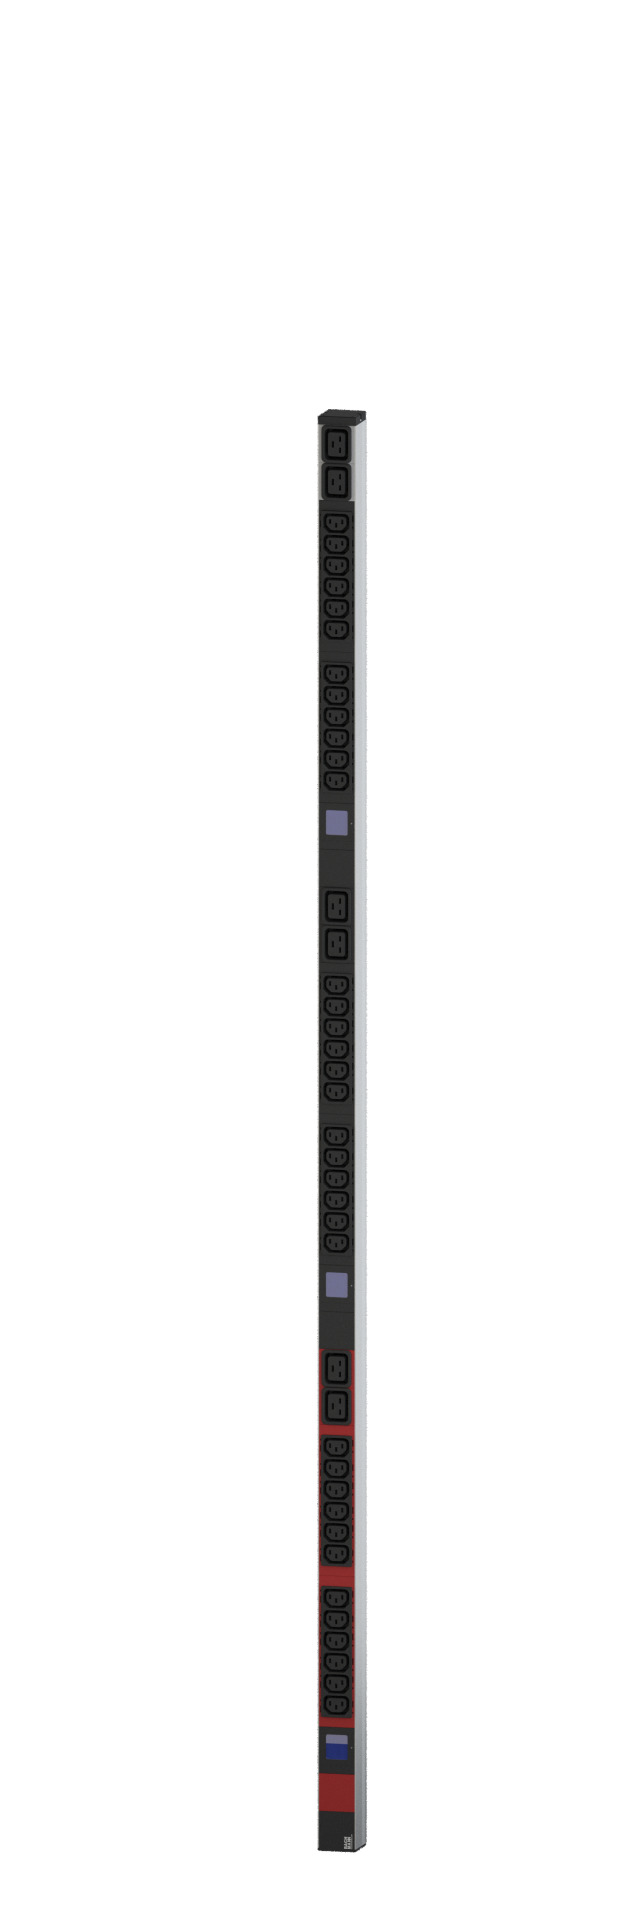 PDU Vertikal BN500 36xC13 6xC19 400V 16A with Power Measuring (Display)